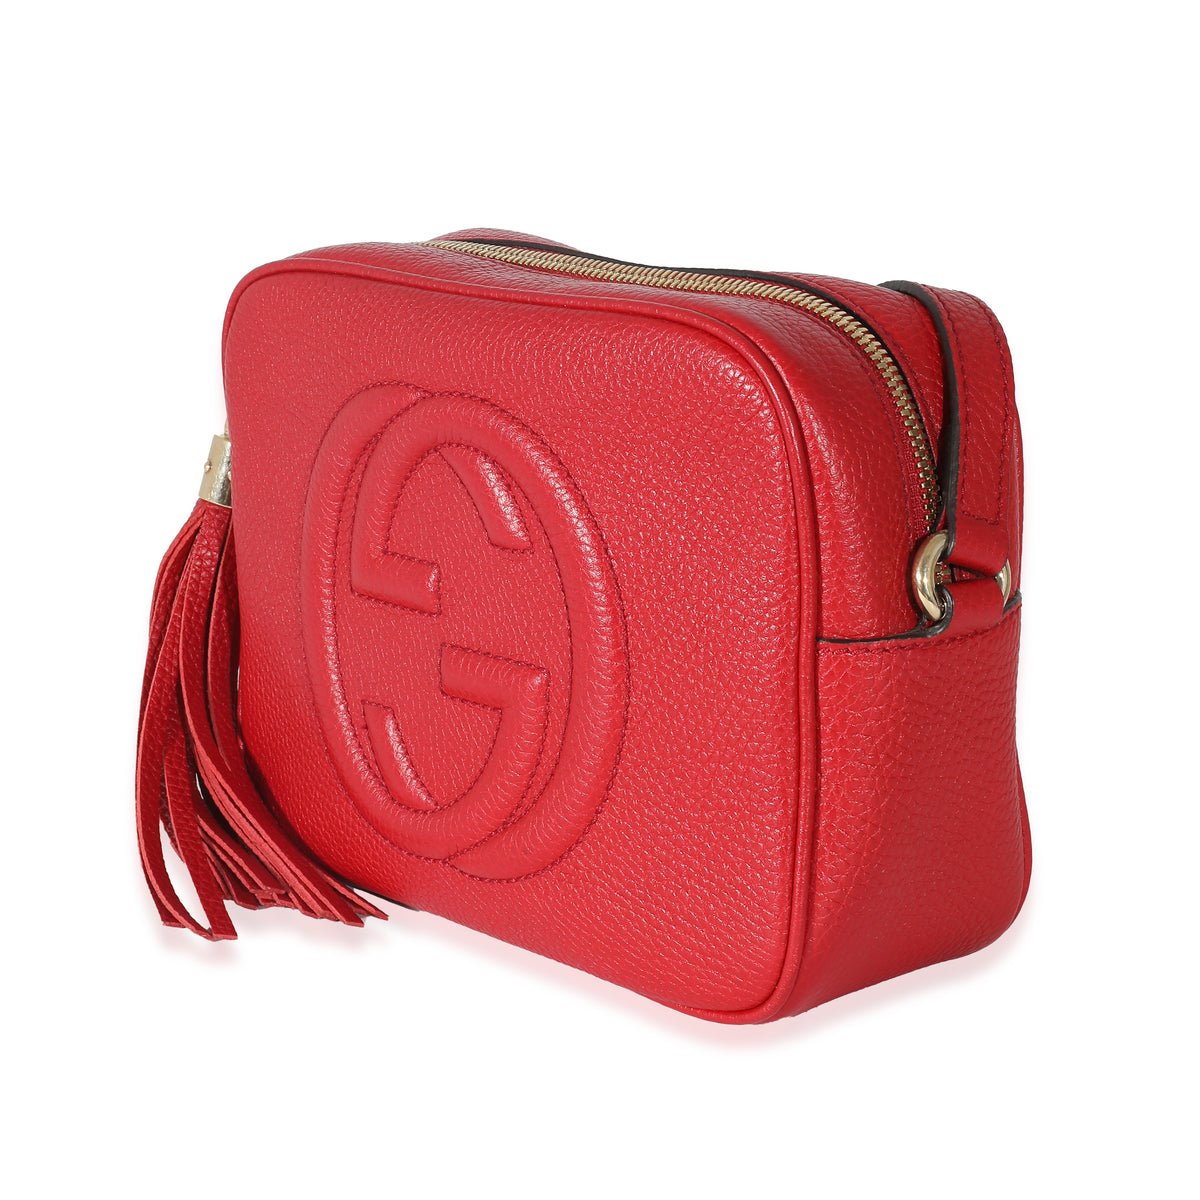 Gucci Pebbled Calfskin Small Soho Disco Bag Tabasco Red